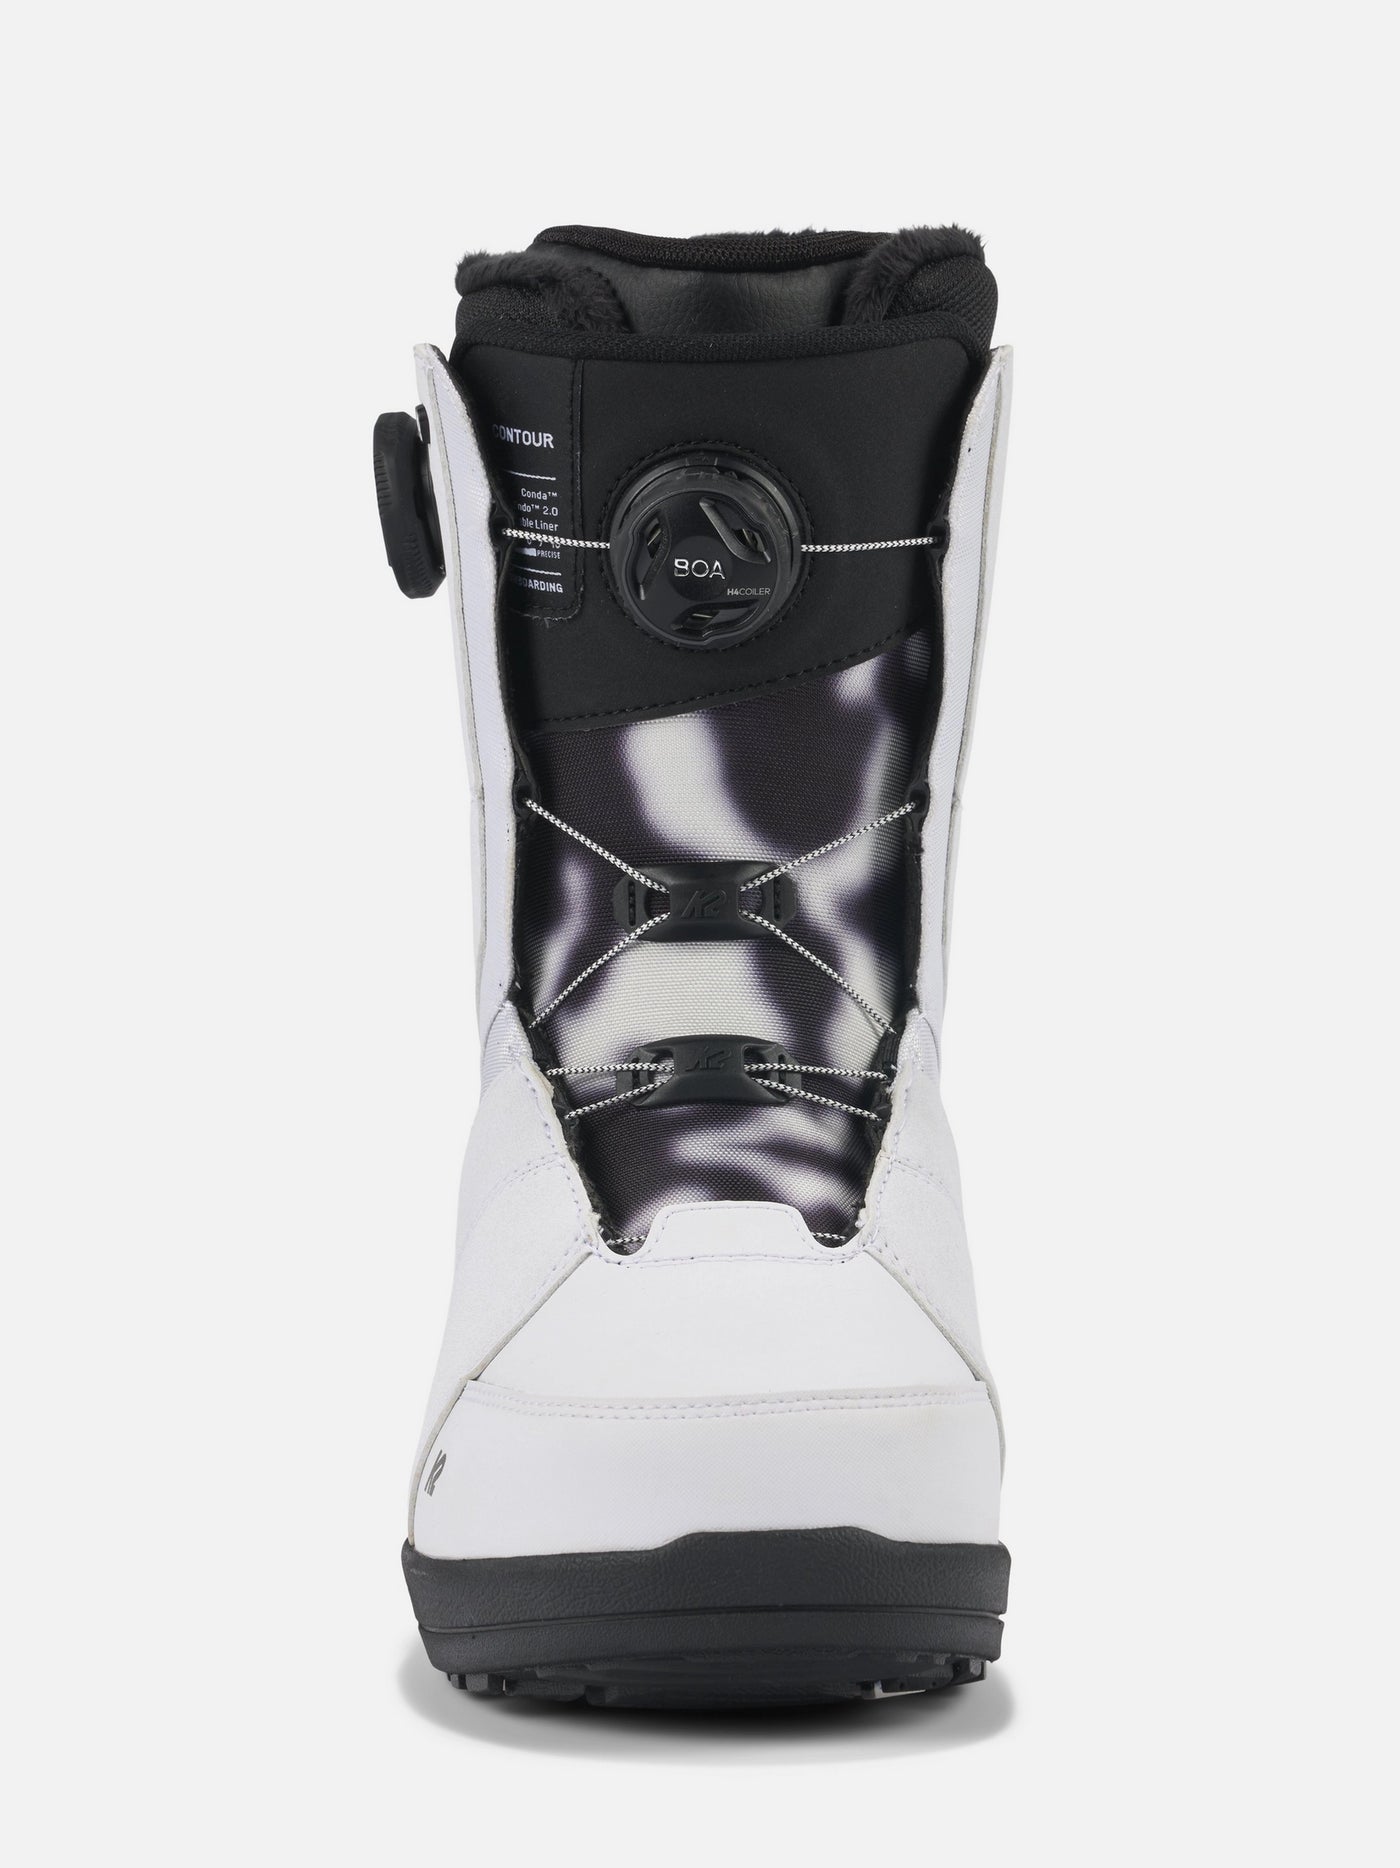 Snowboard Boots K2 CONTOUR DOUBLE BOA- White